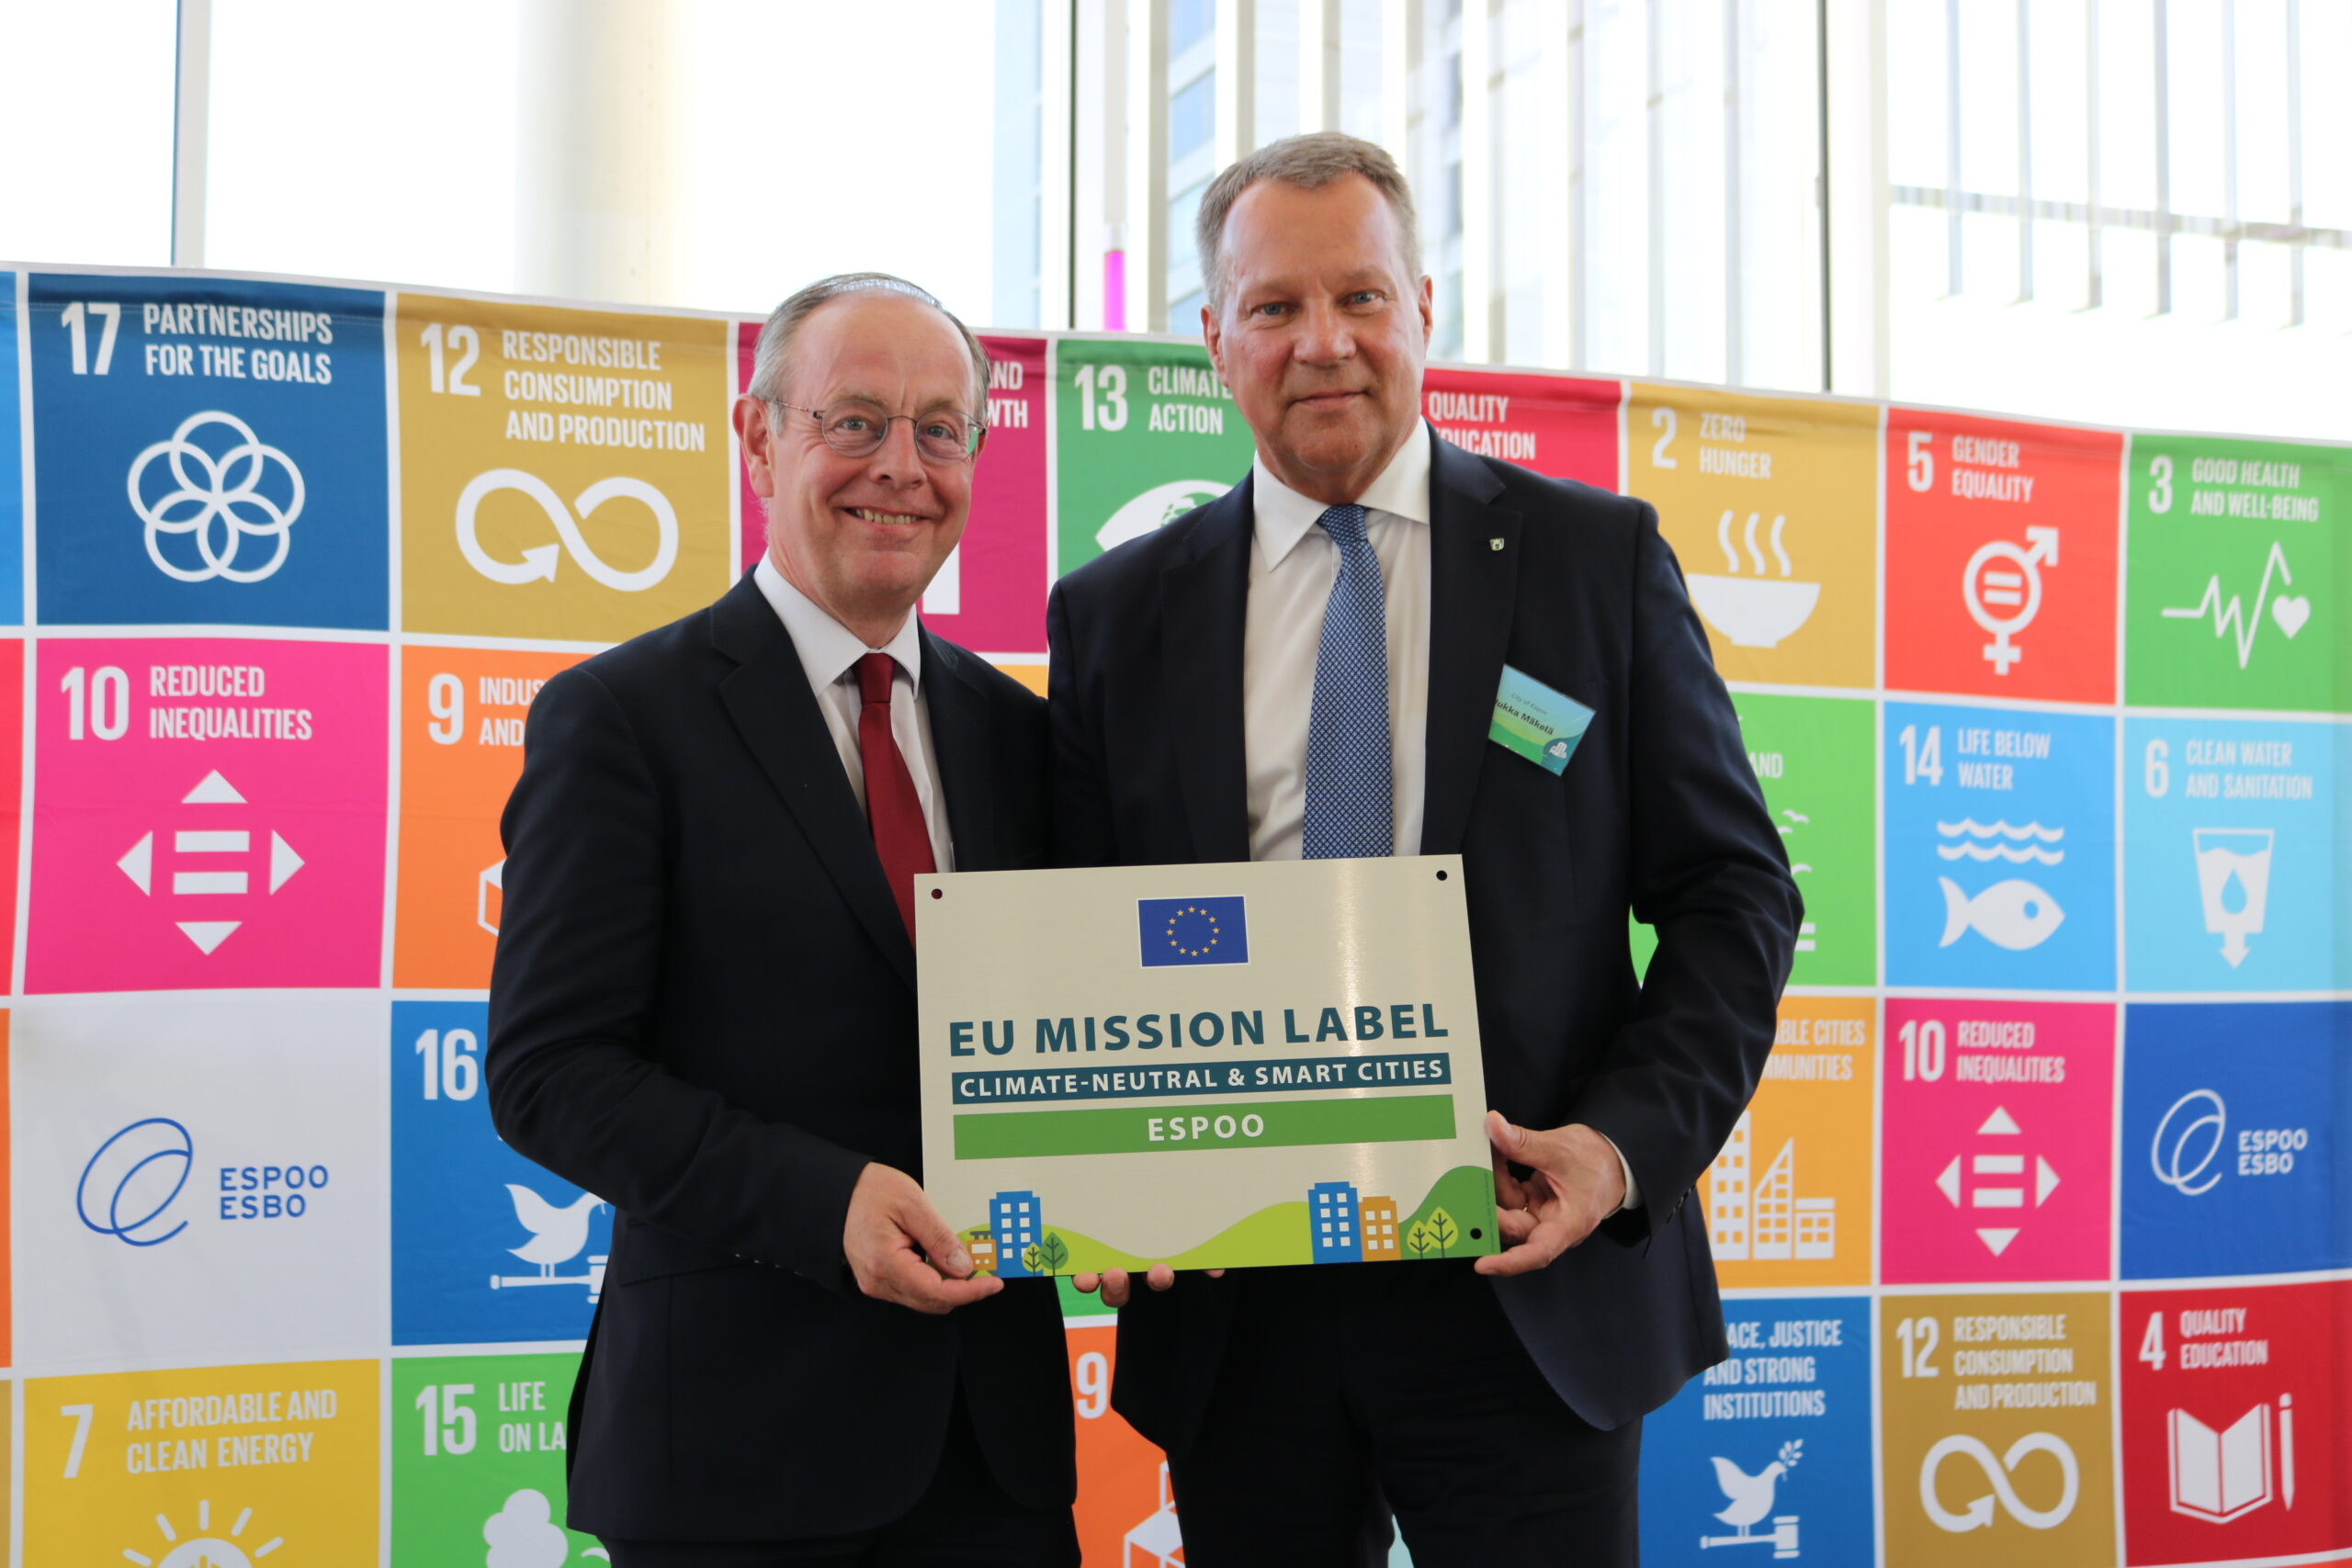 European Commission recognises Espoo’s climate work